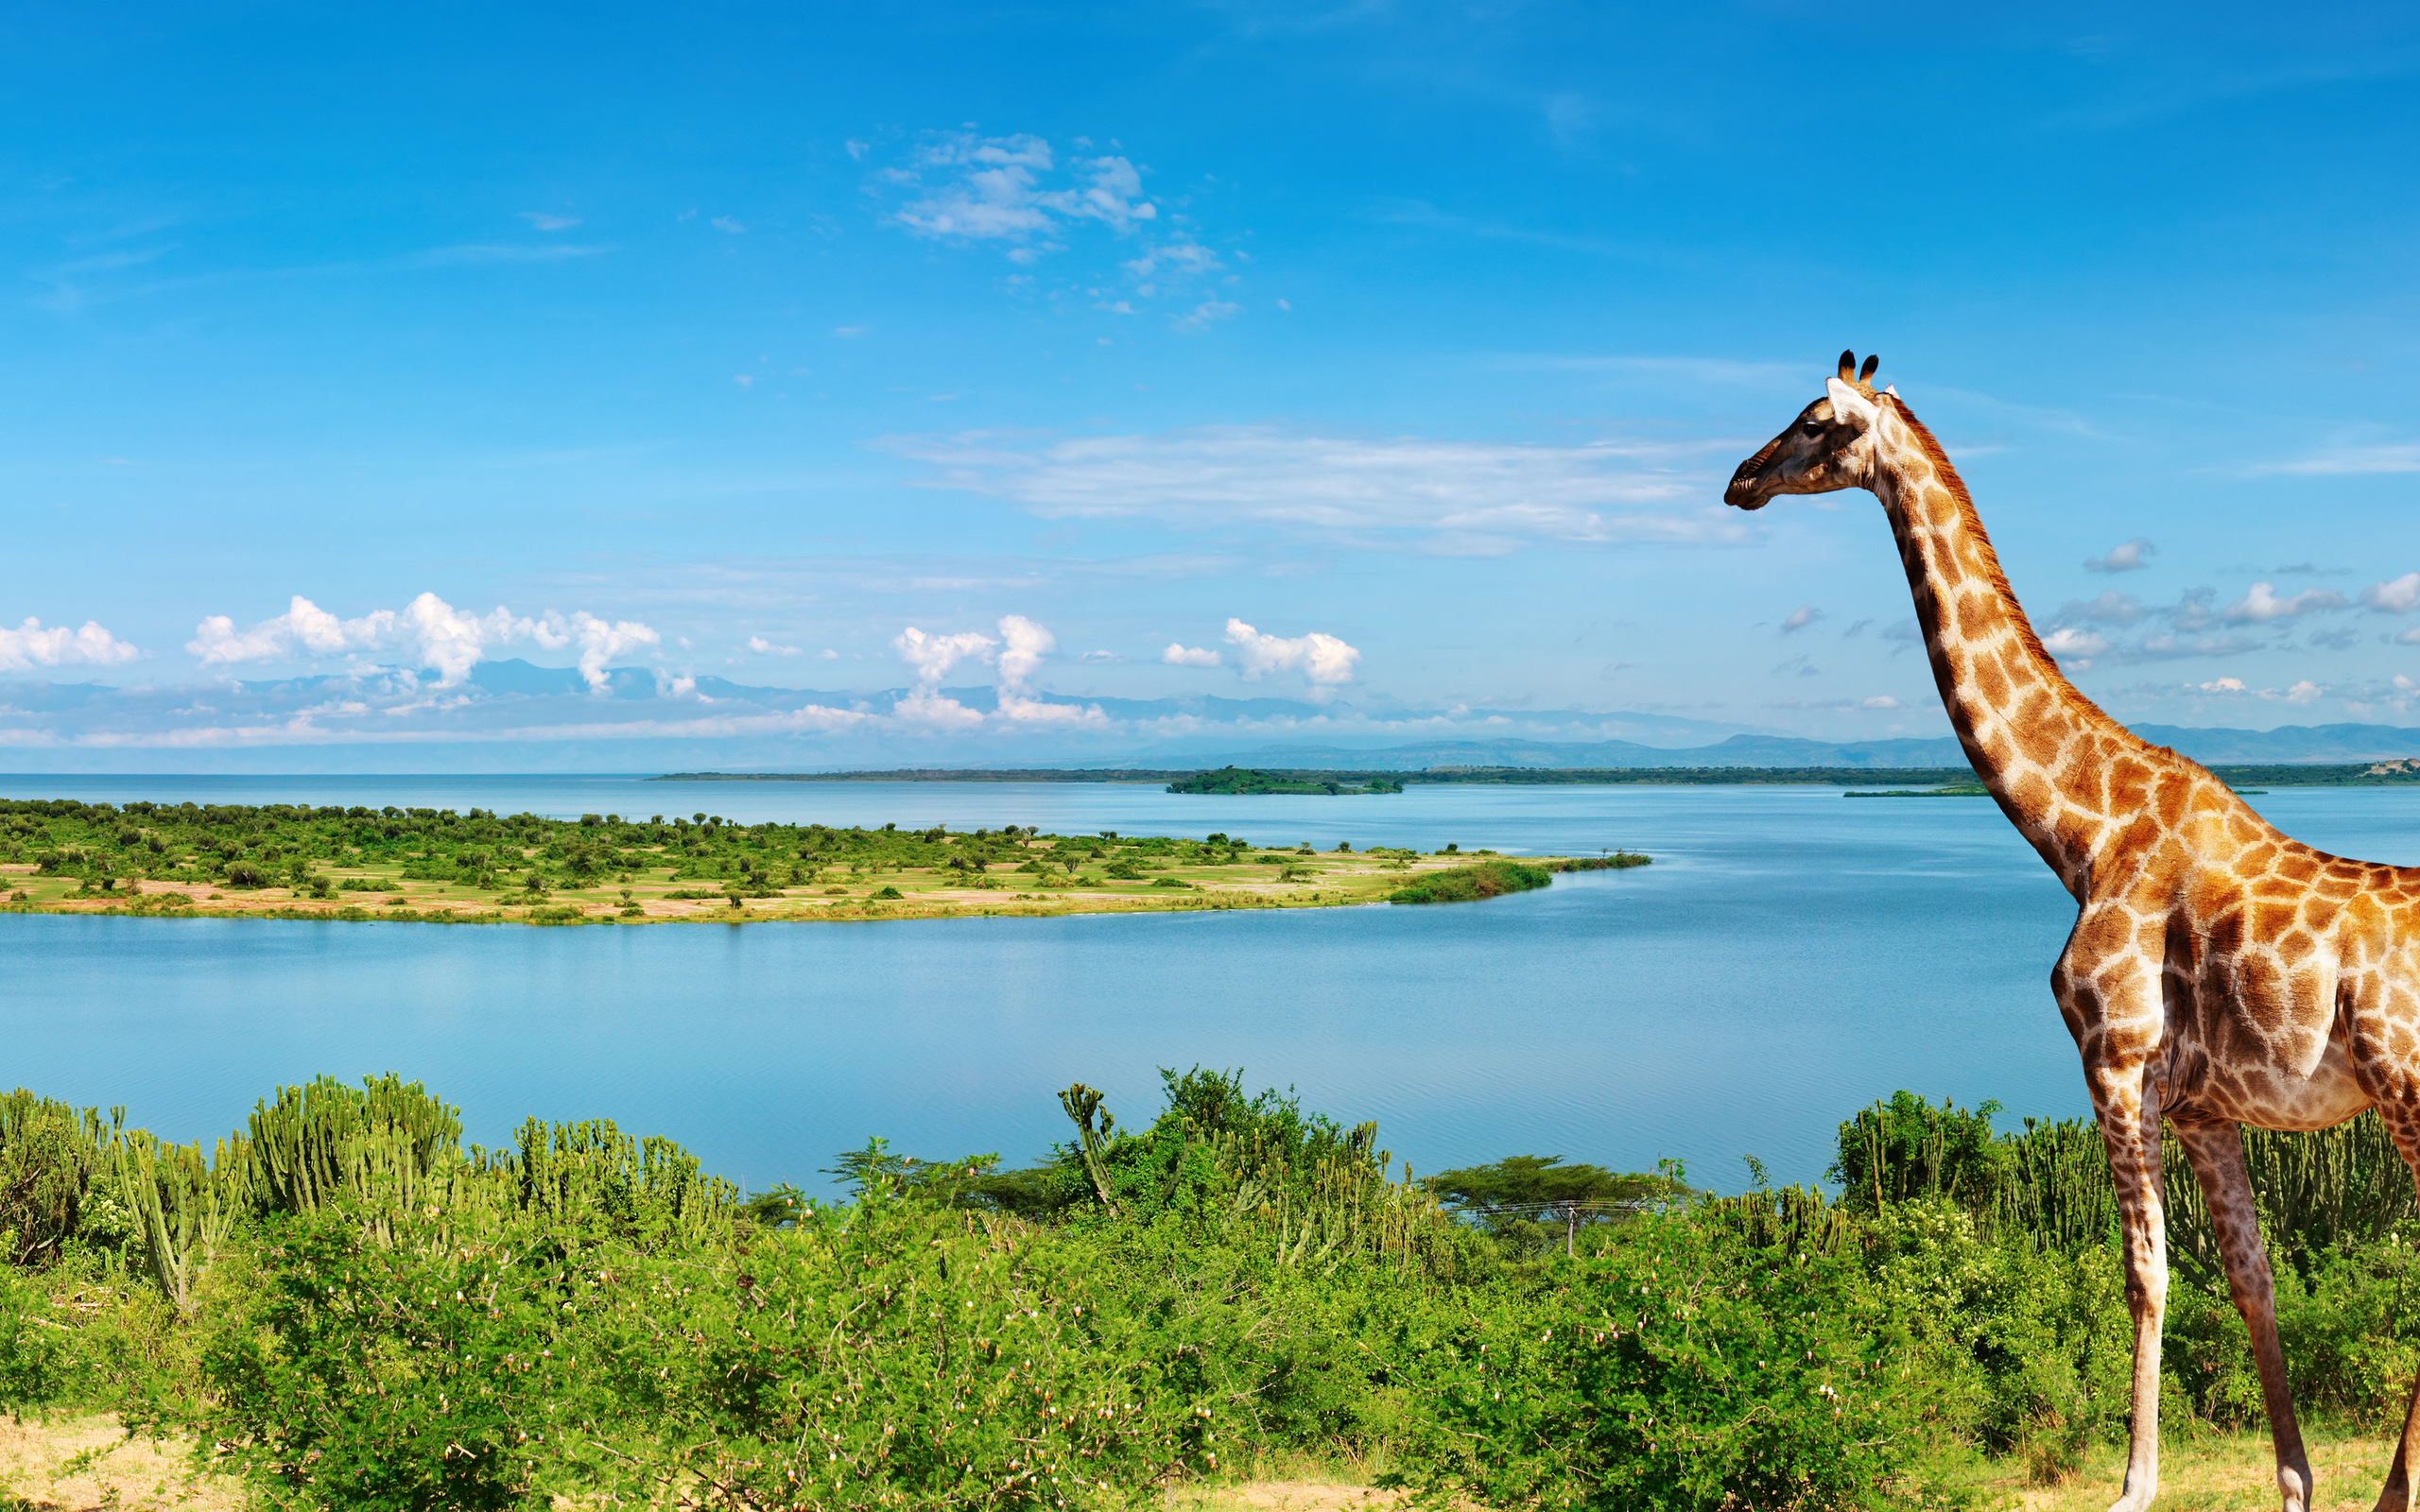 Giraffe at Nile river 4K Ultra HD wallpaper 4k WallpaperNet